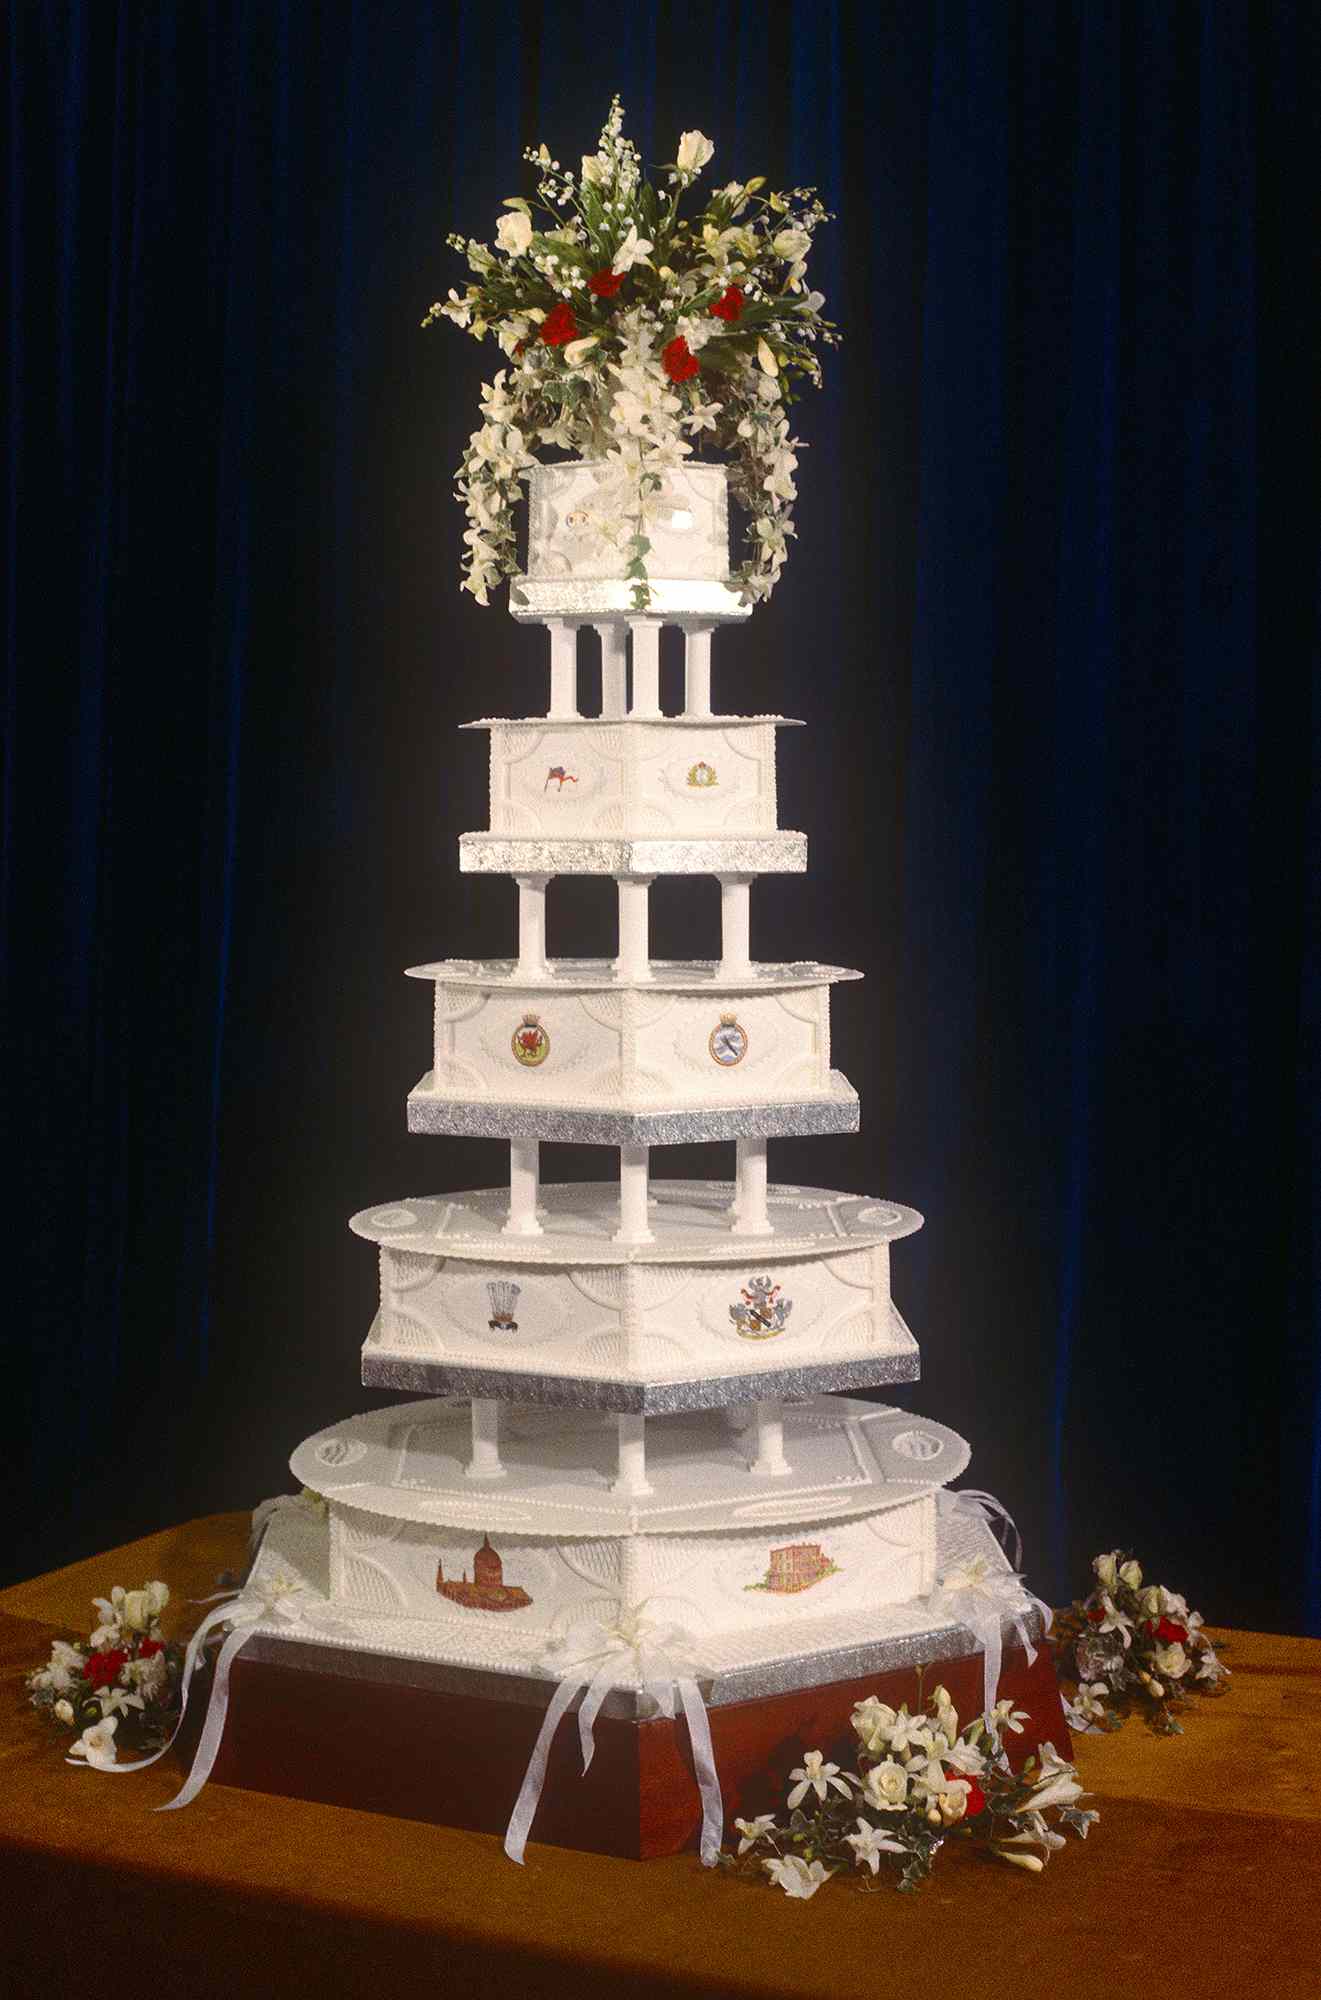 Diana Royal Wedding cake